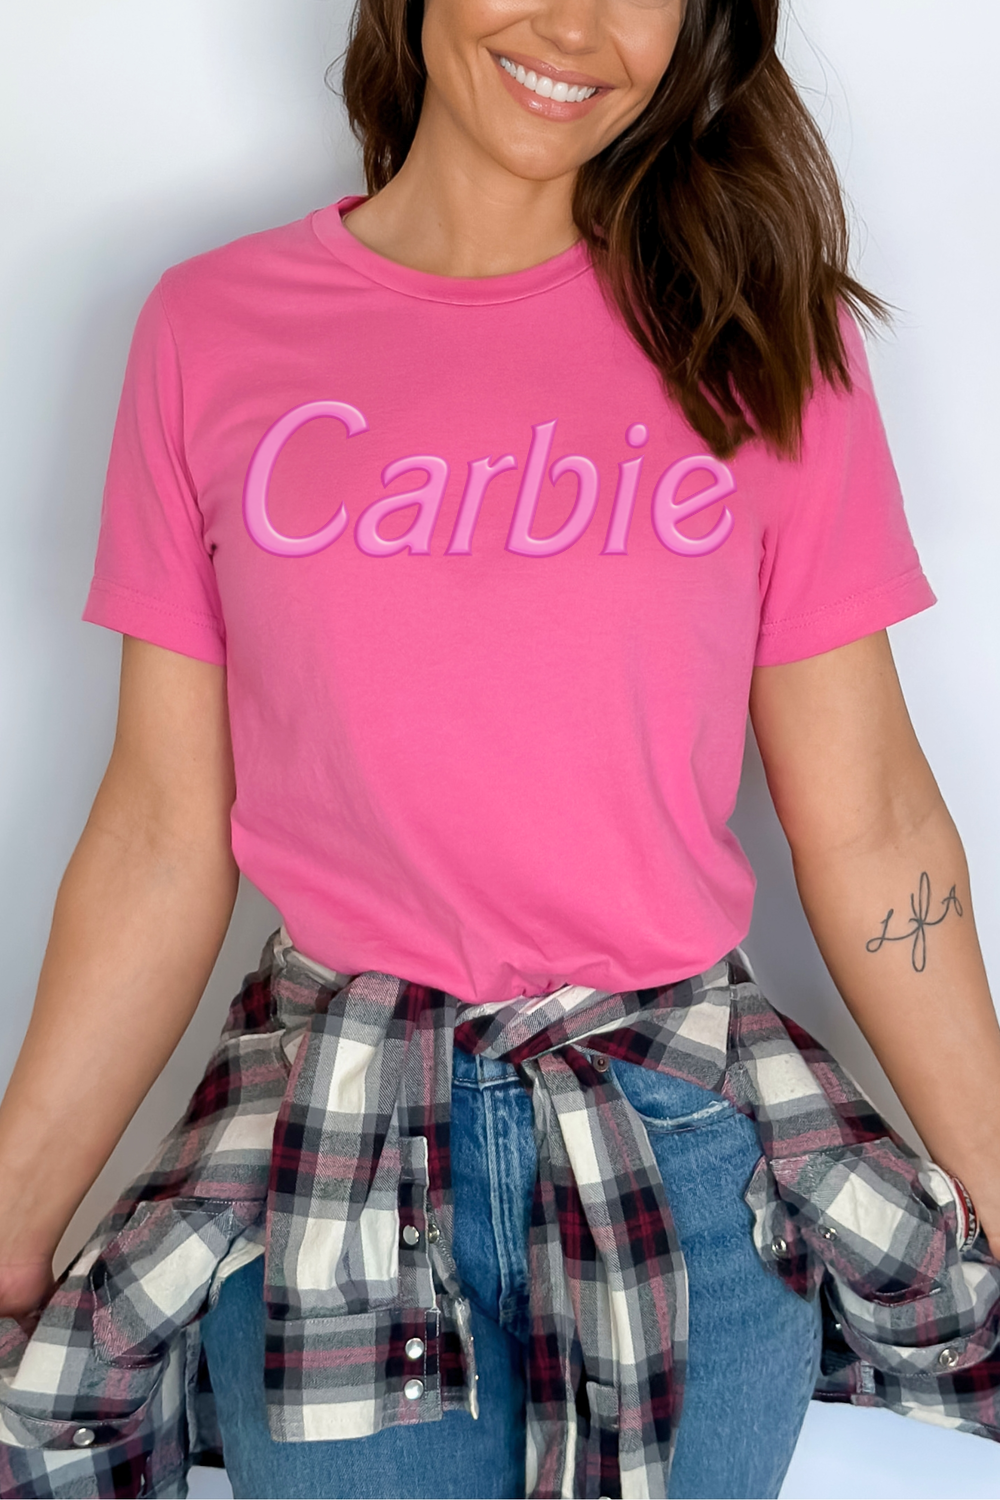 Carbie Women's Casual T-Shirt